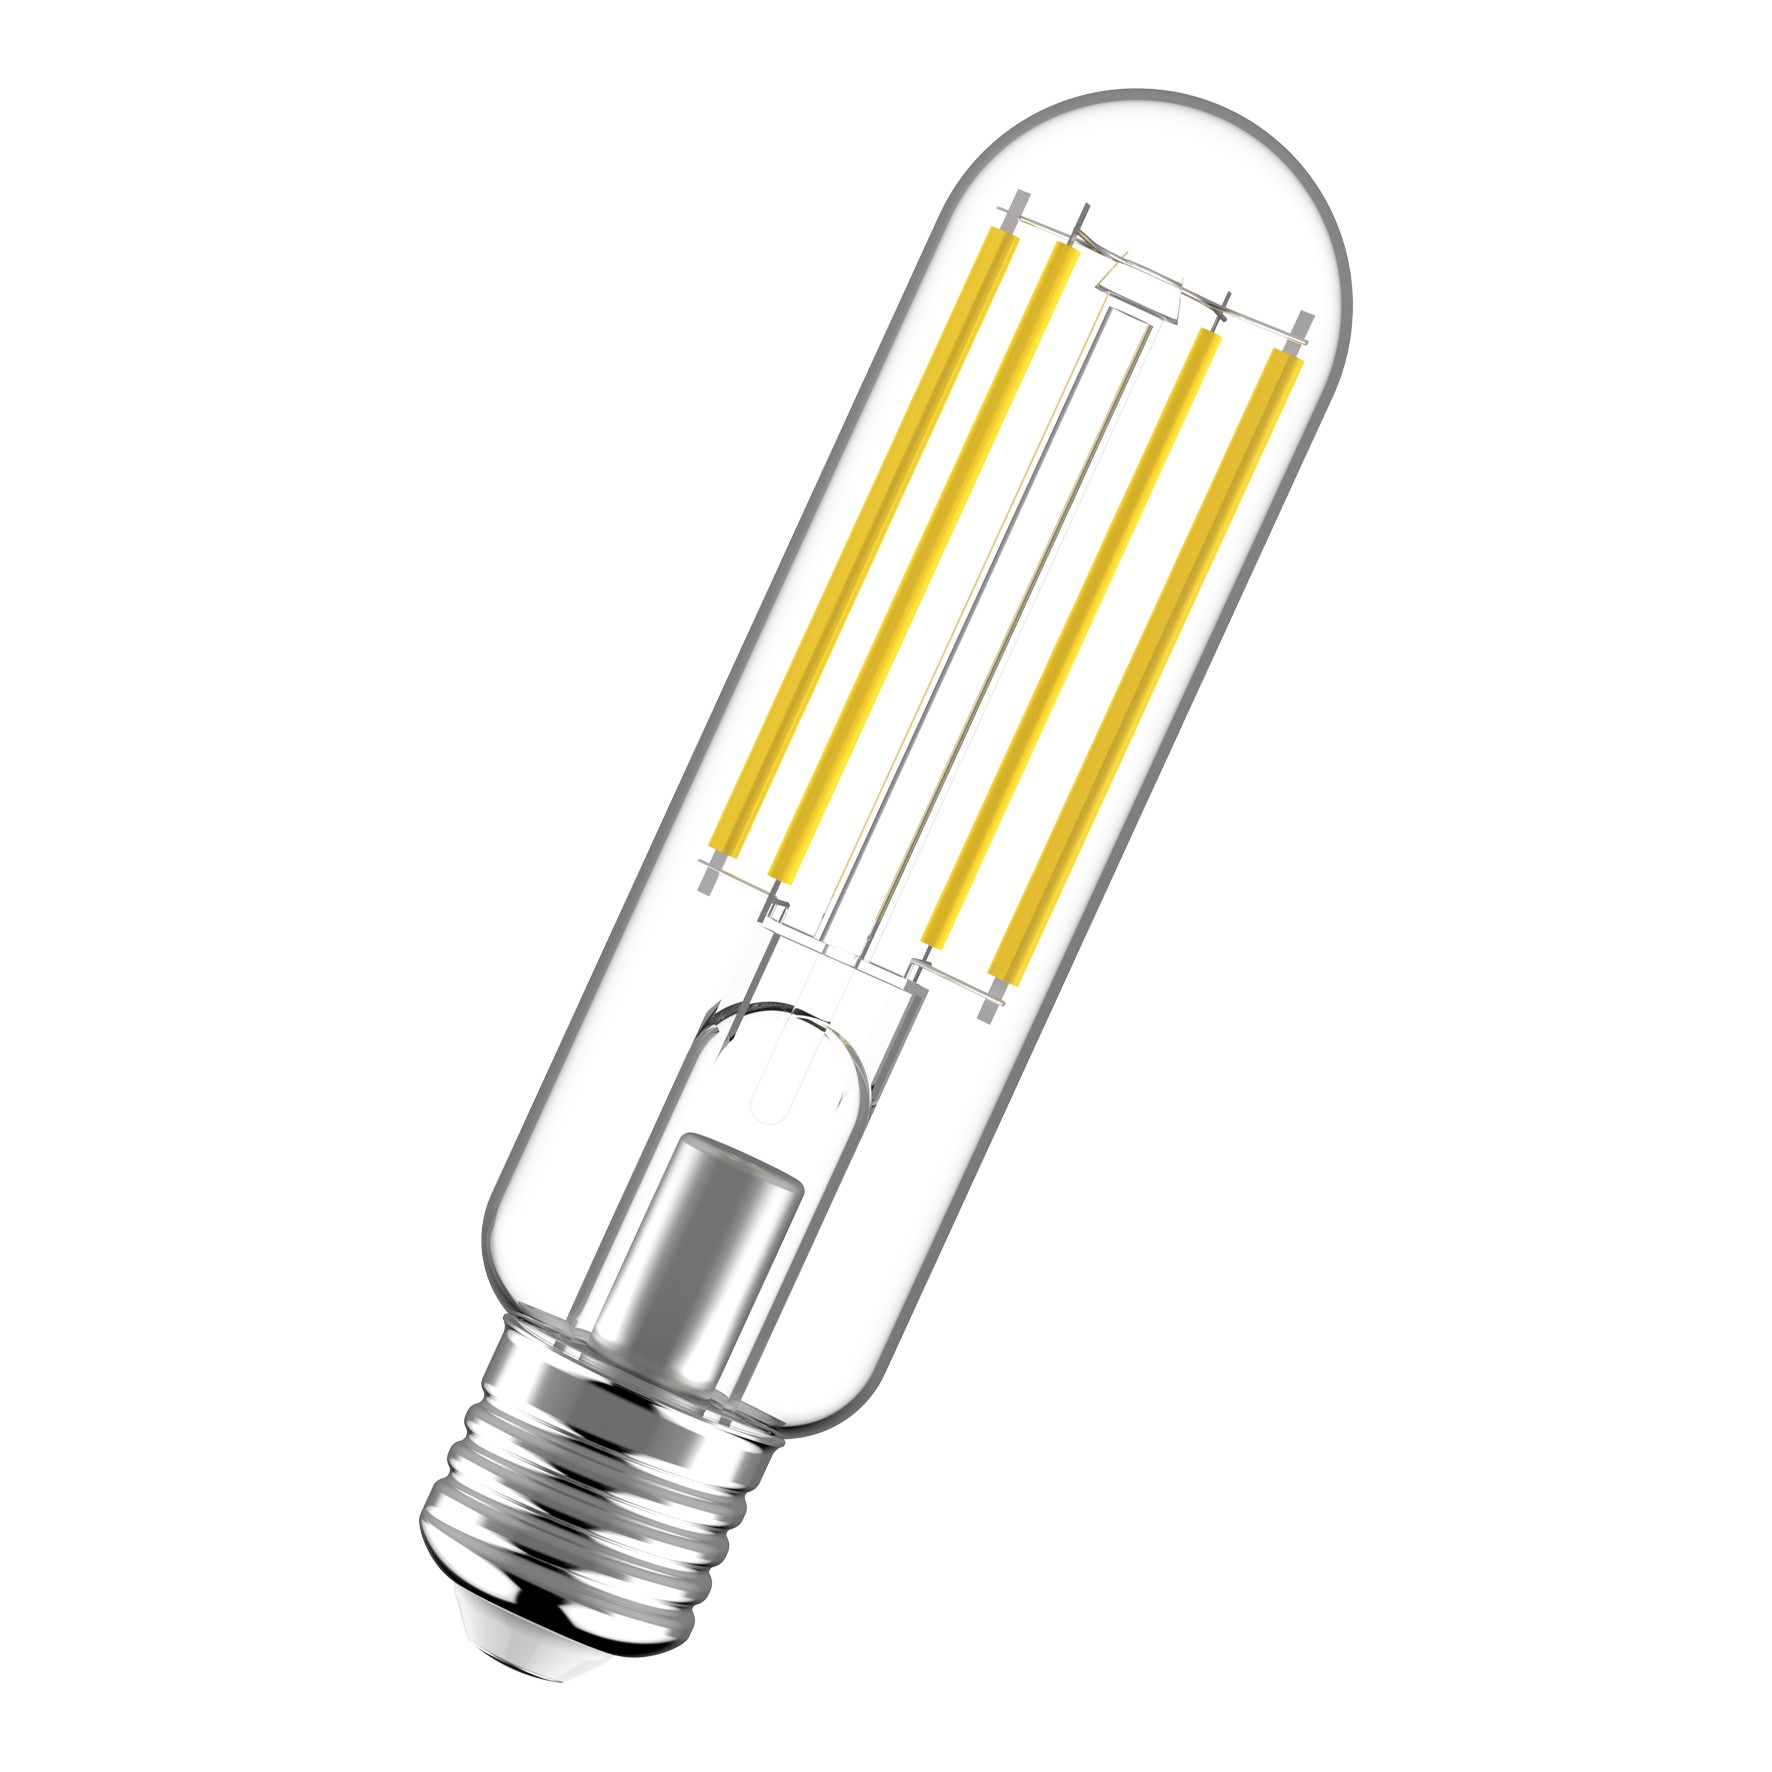 Heule Lampen AG. LED Lampen Shop, LED Spots, LED Spot 12V GU4, GU5,3